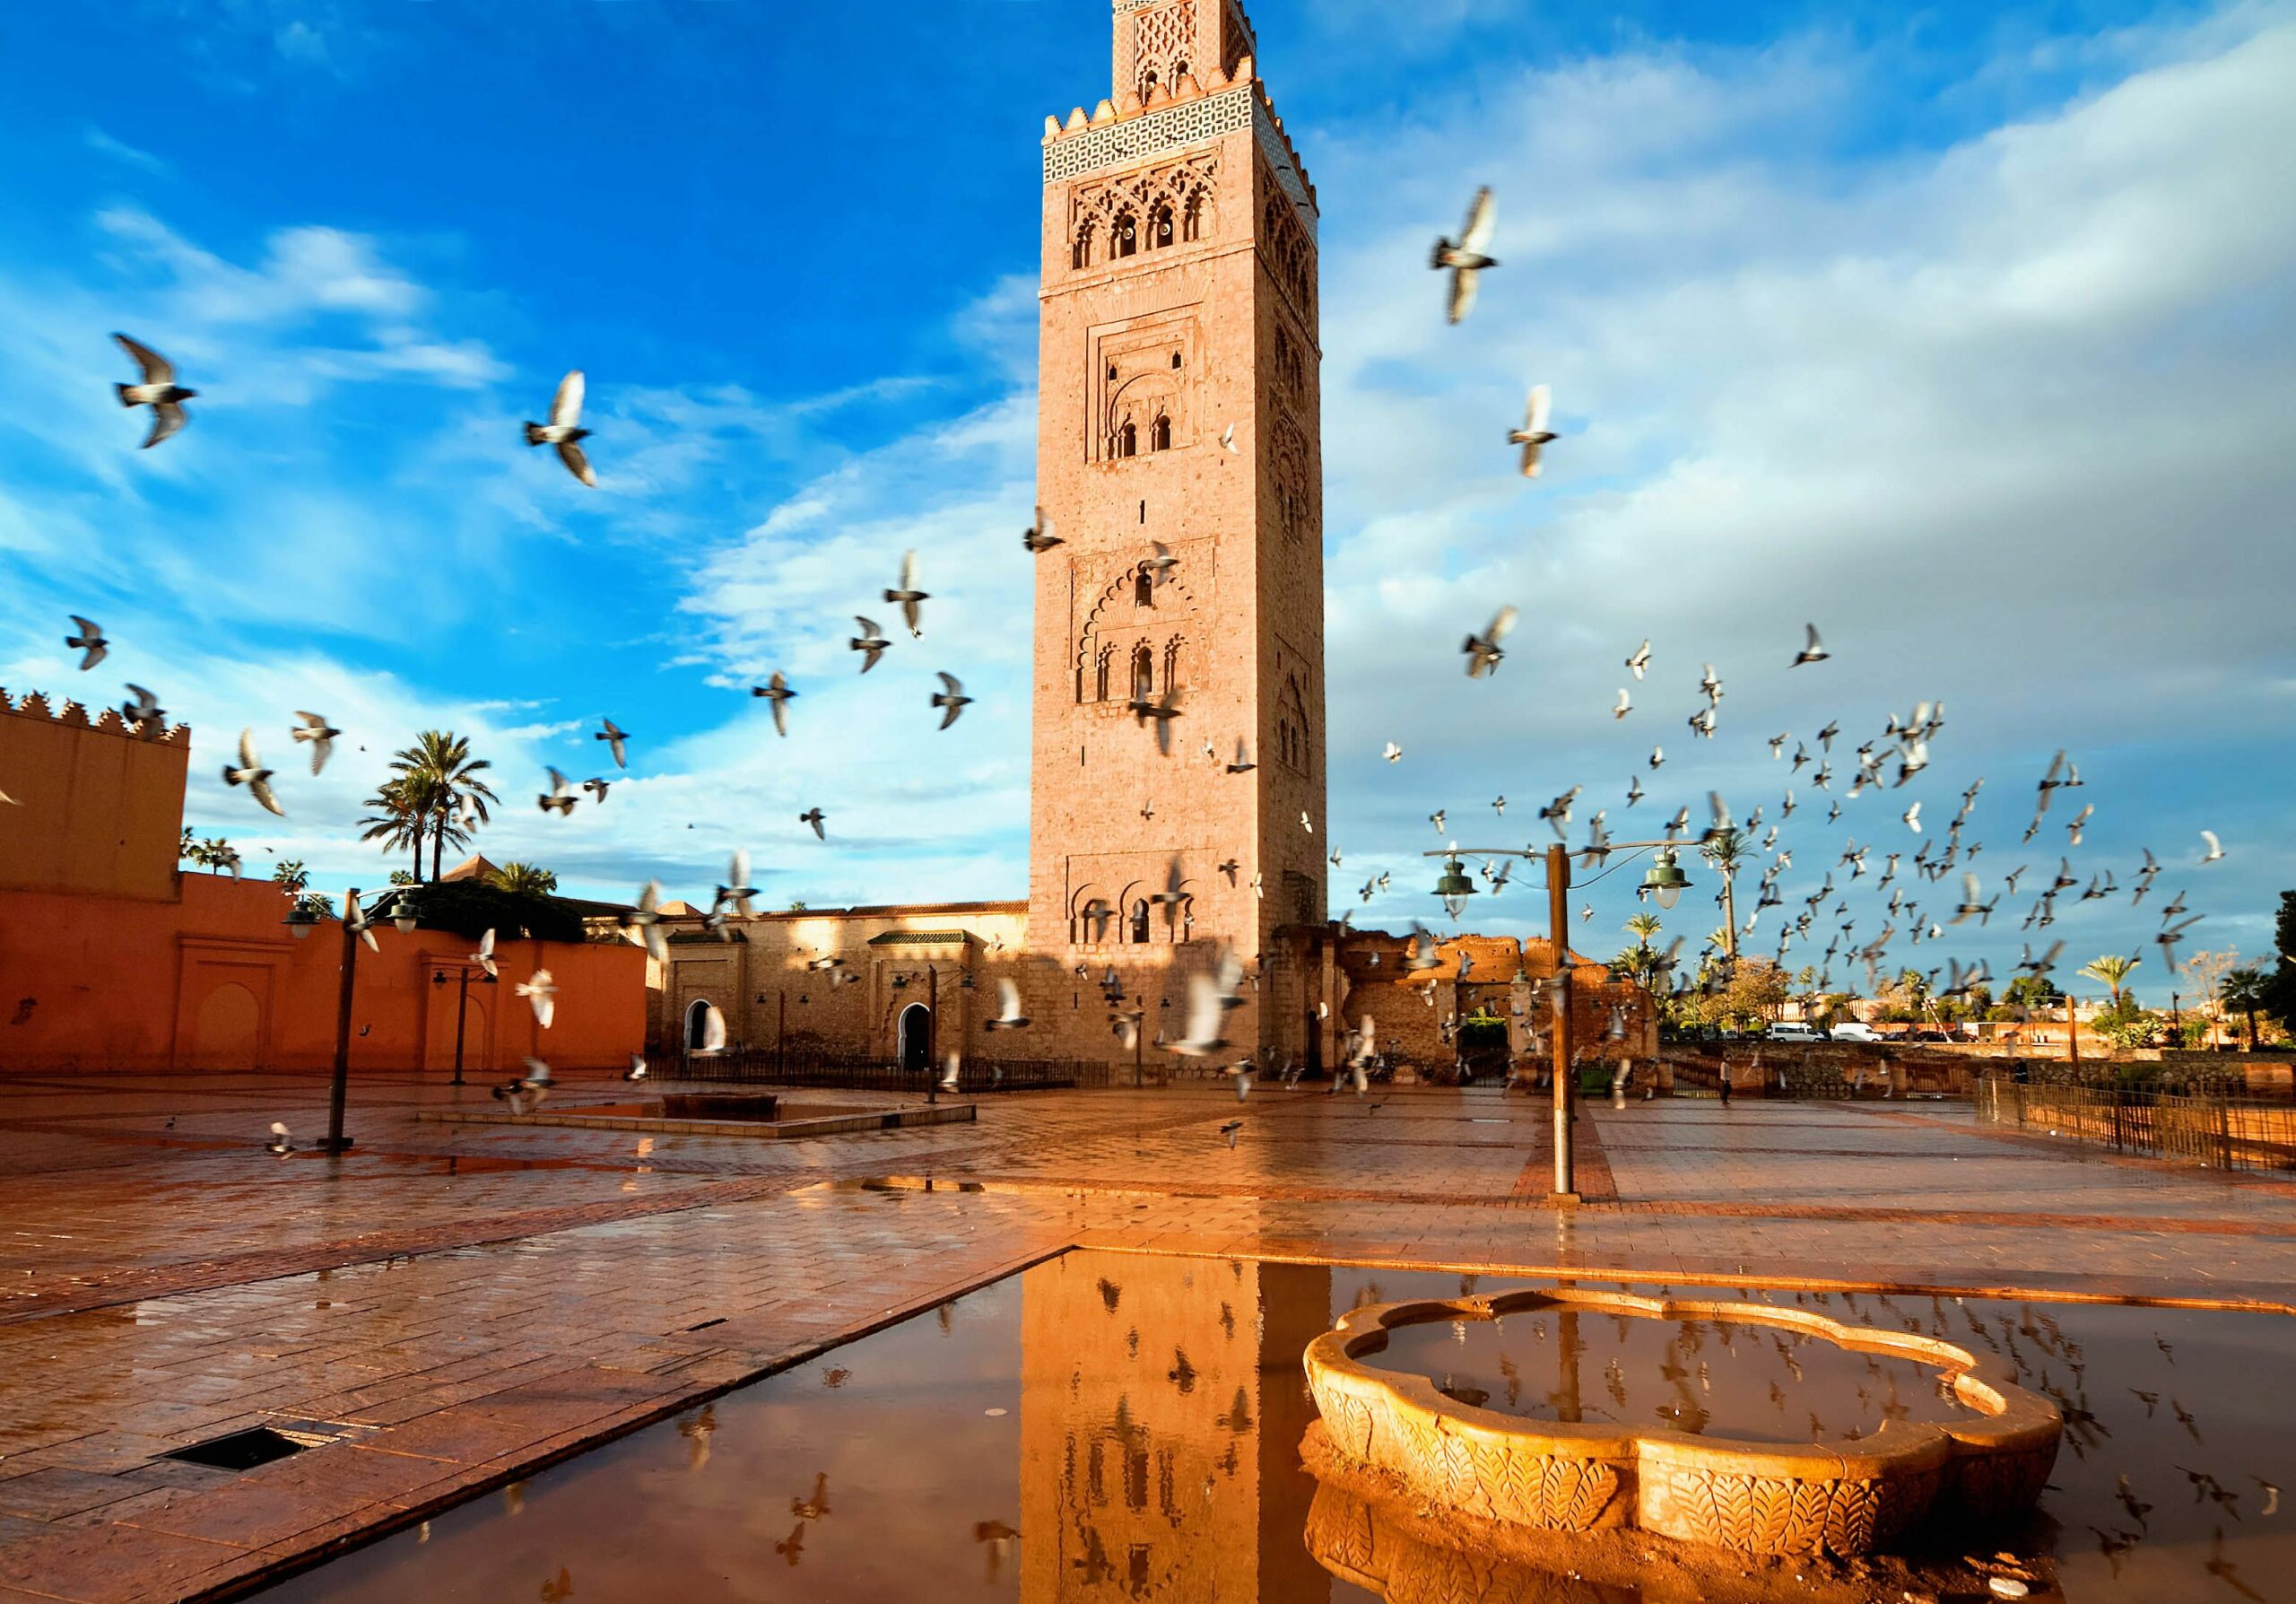 Morocco, Tunisia, Egypt poised for record tourism year